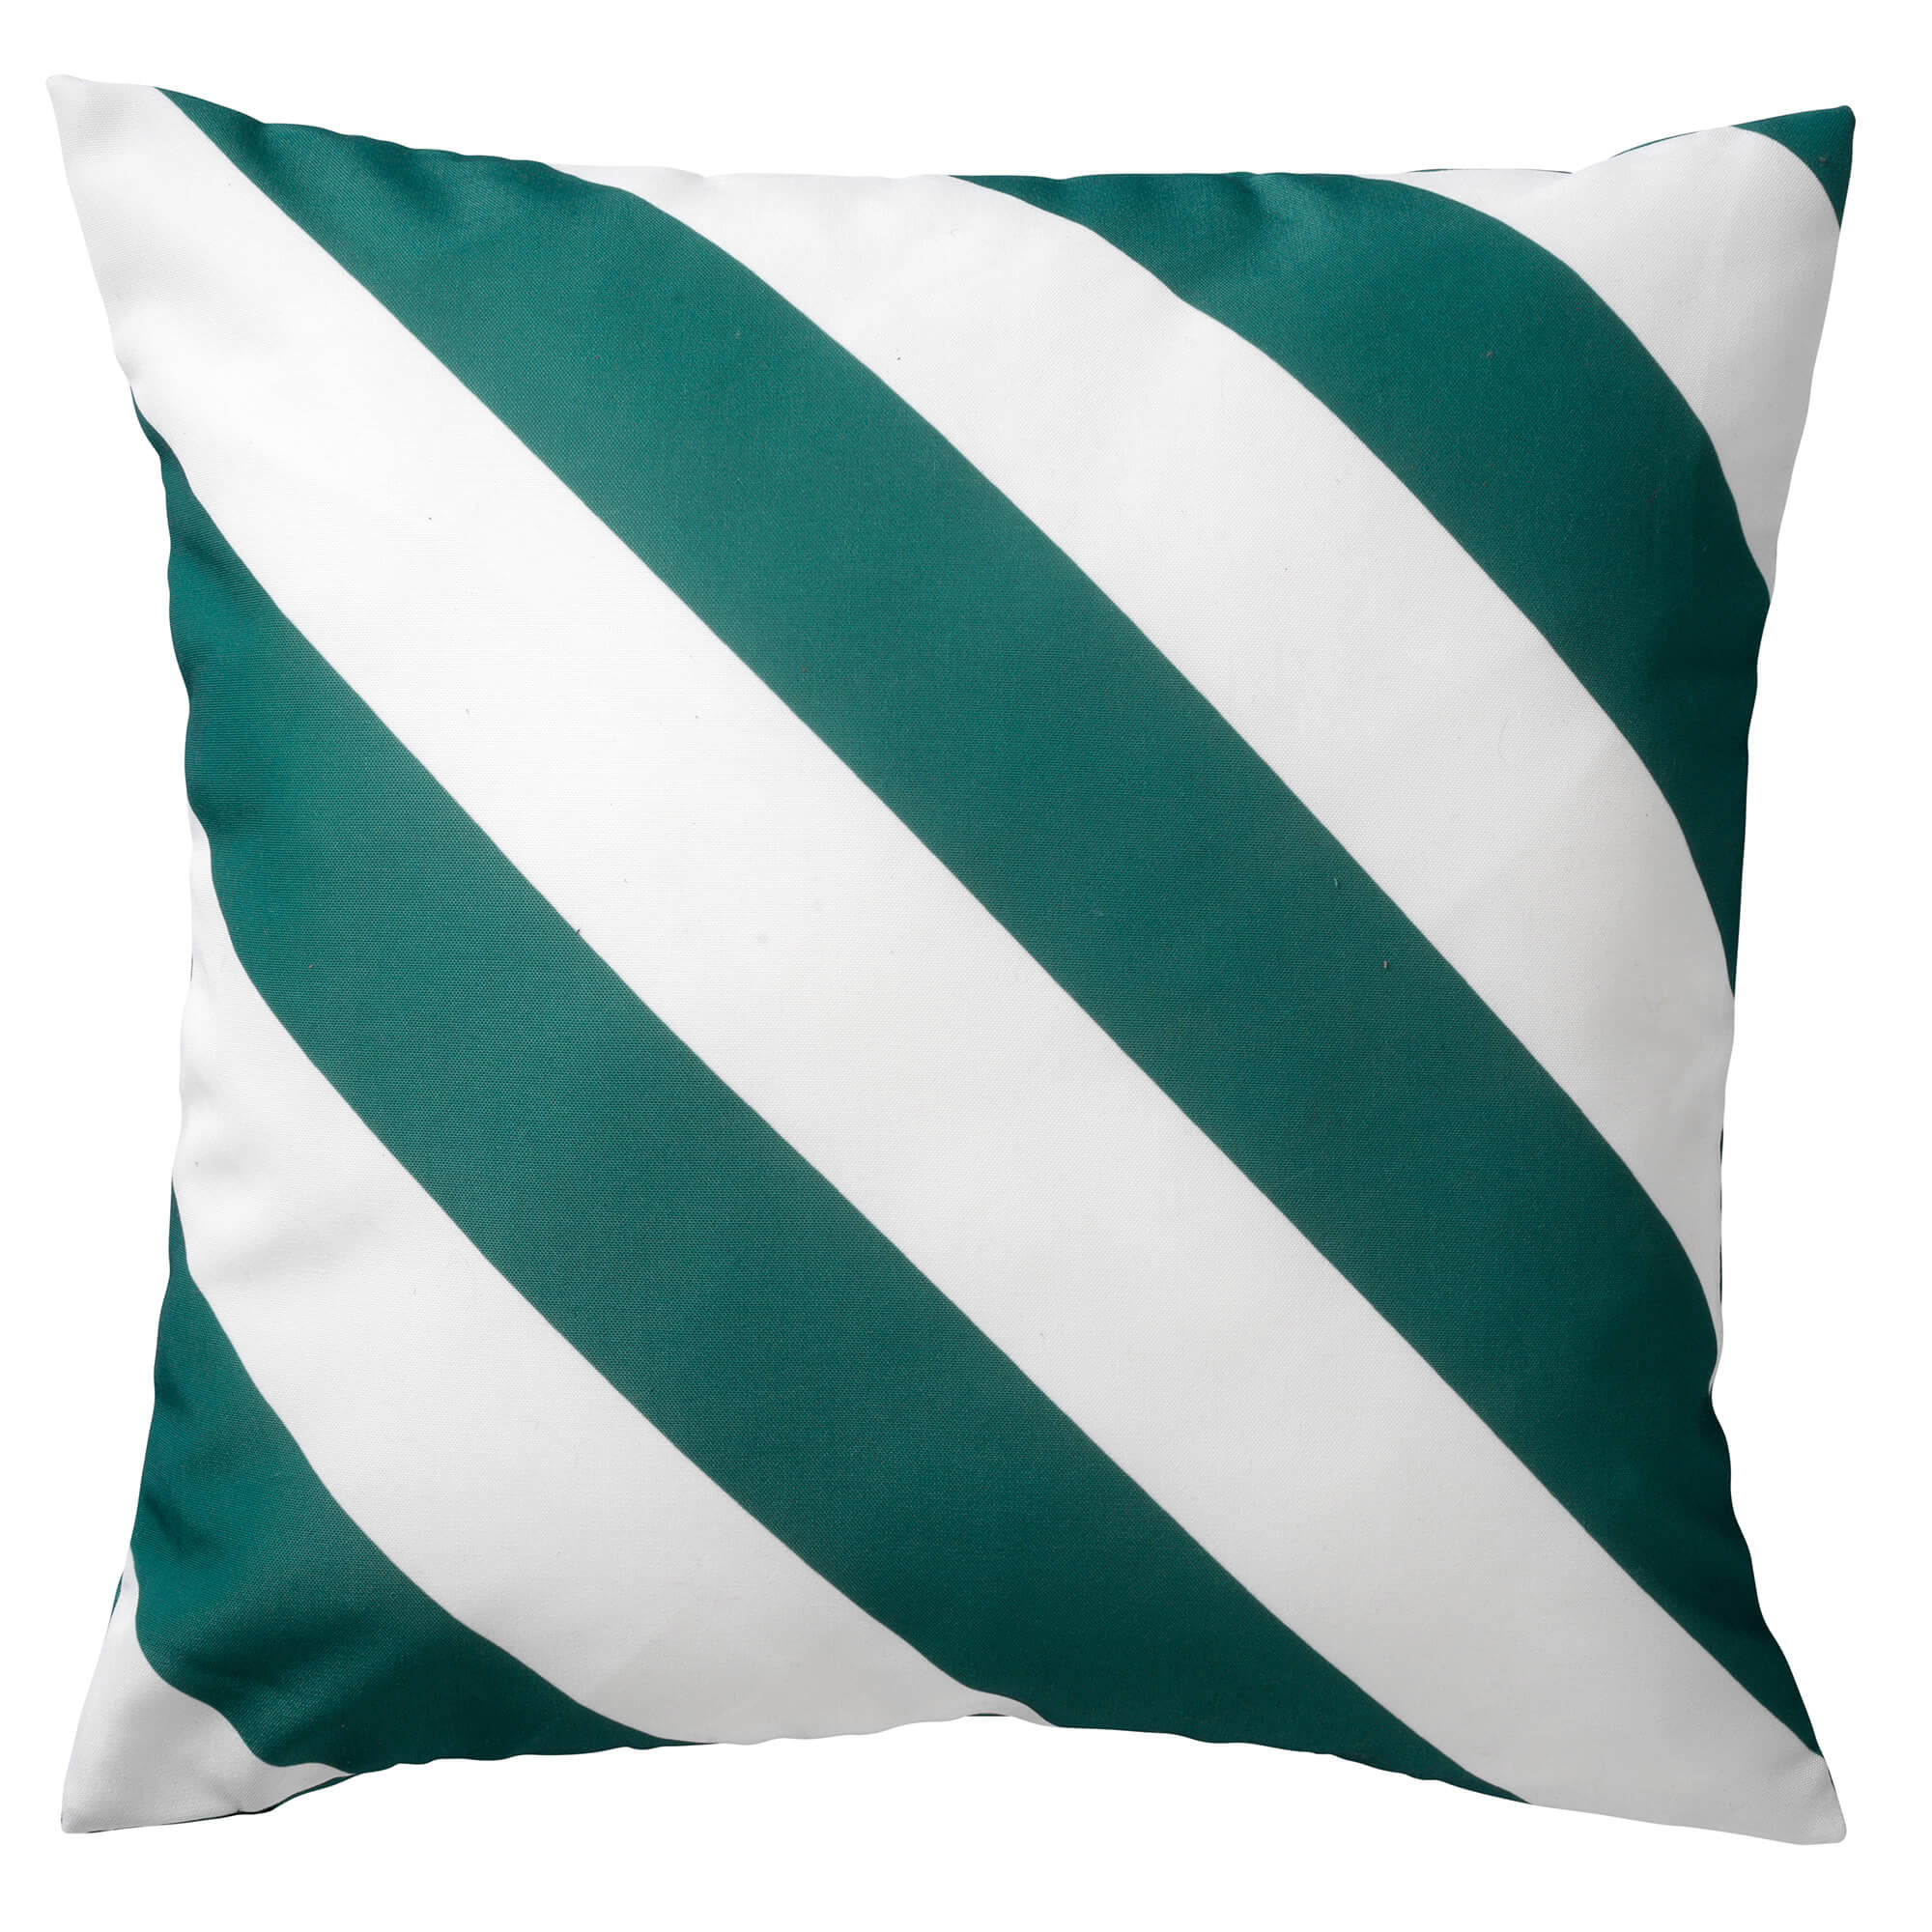 SANZENO - Outdoor Cushion 45x45 cm - water repellent and UV-resistant - Sagebrush Green - green